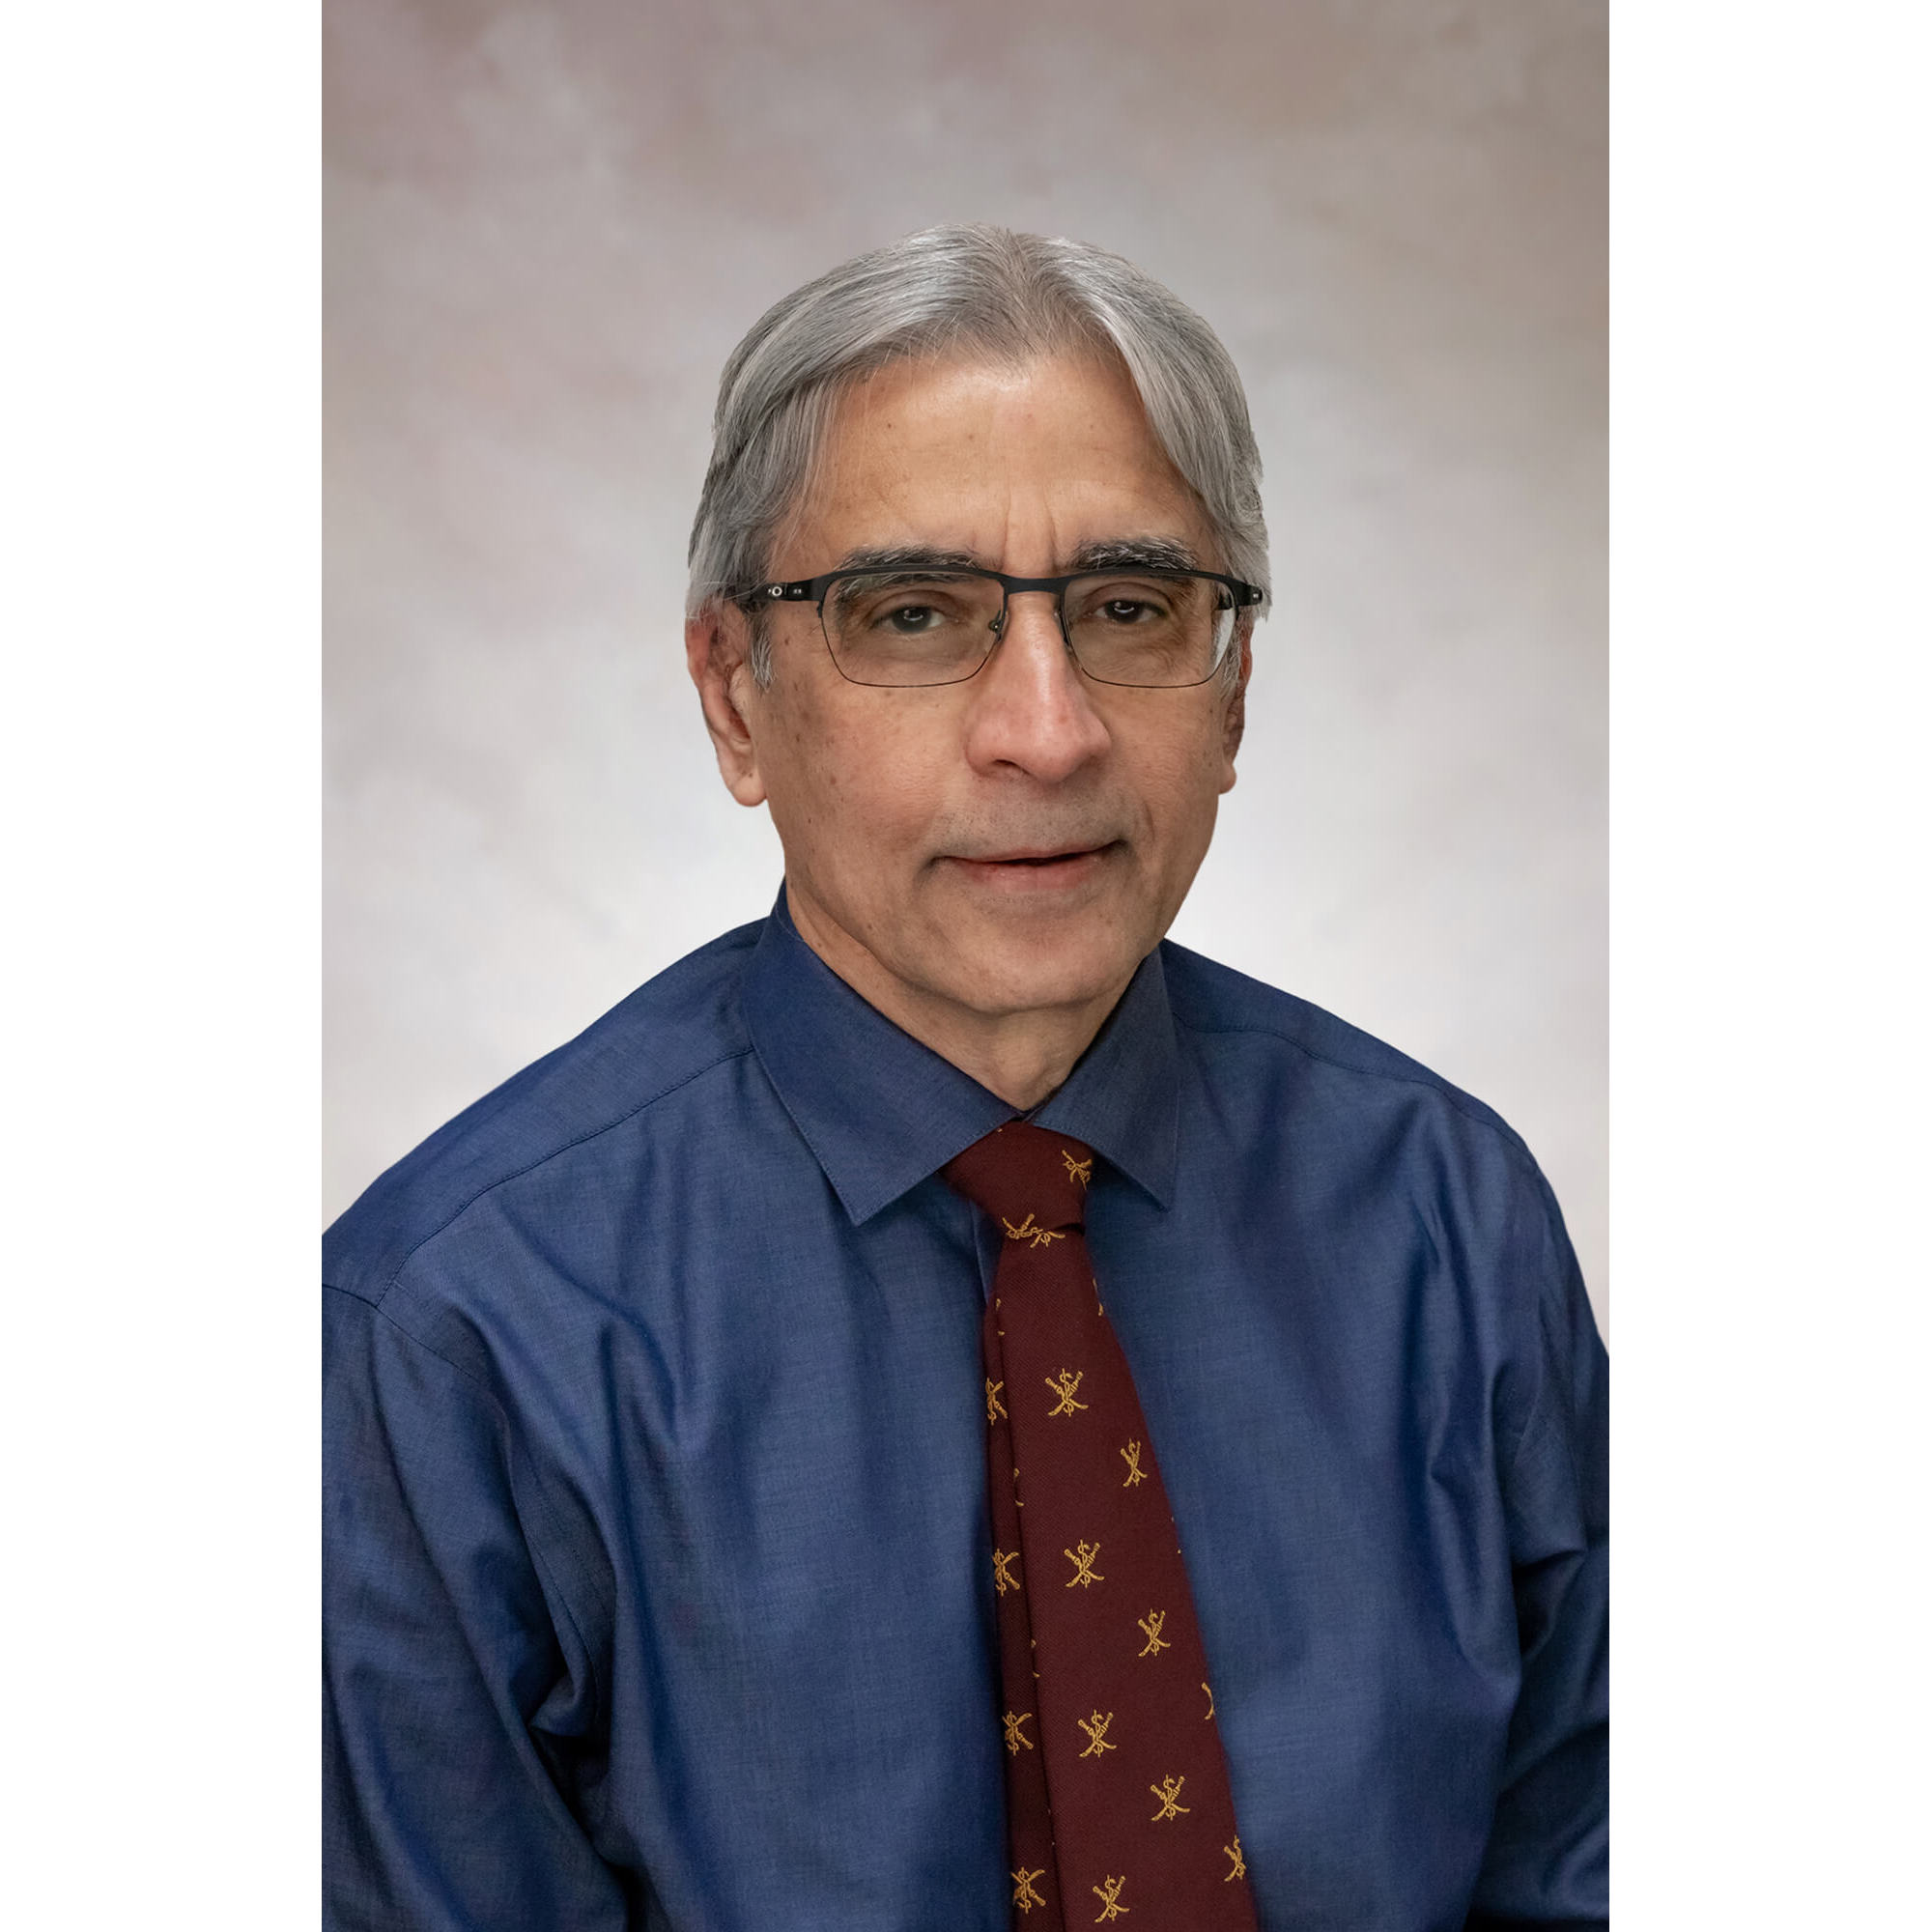 Dr. Rajit Pahwa, MD